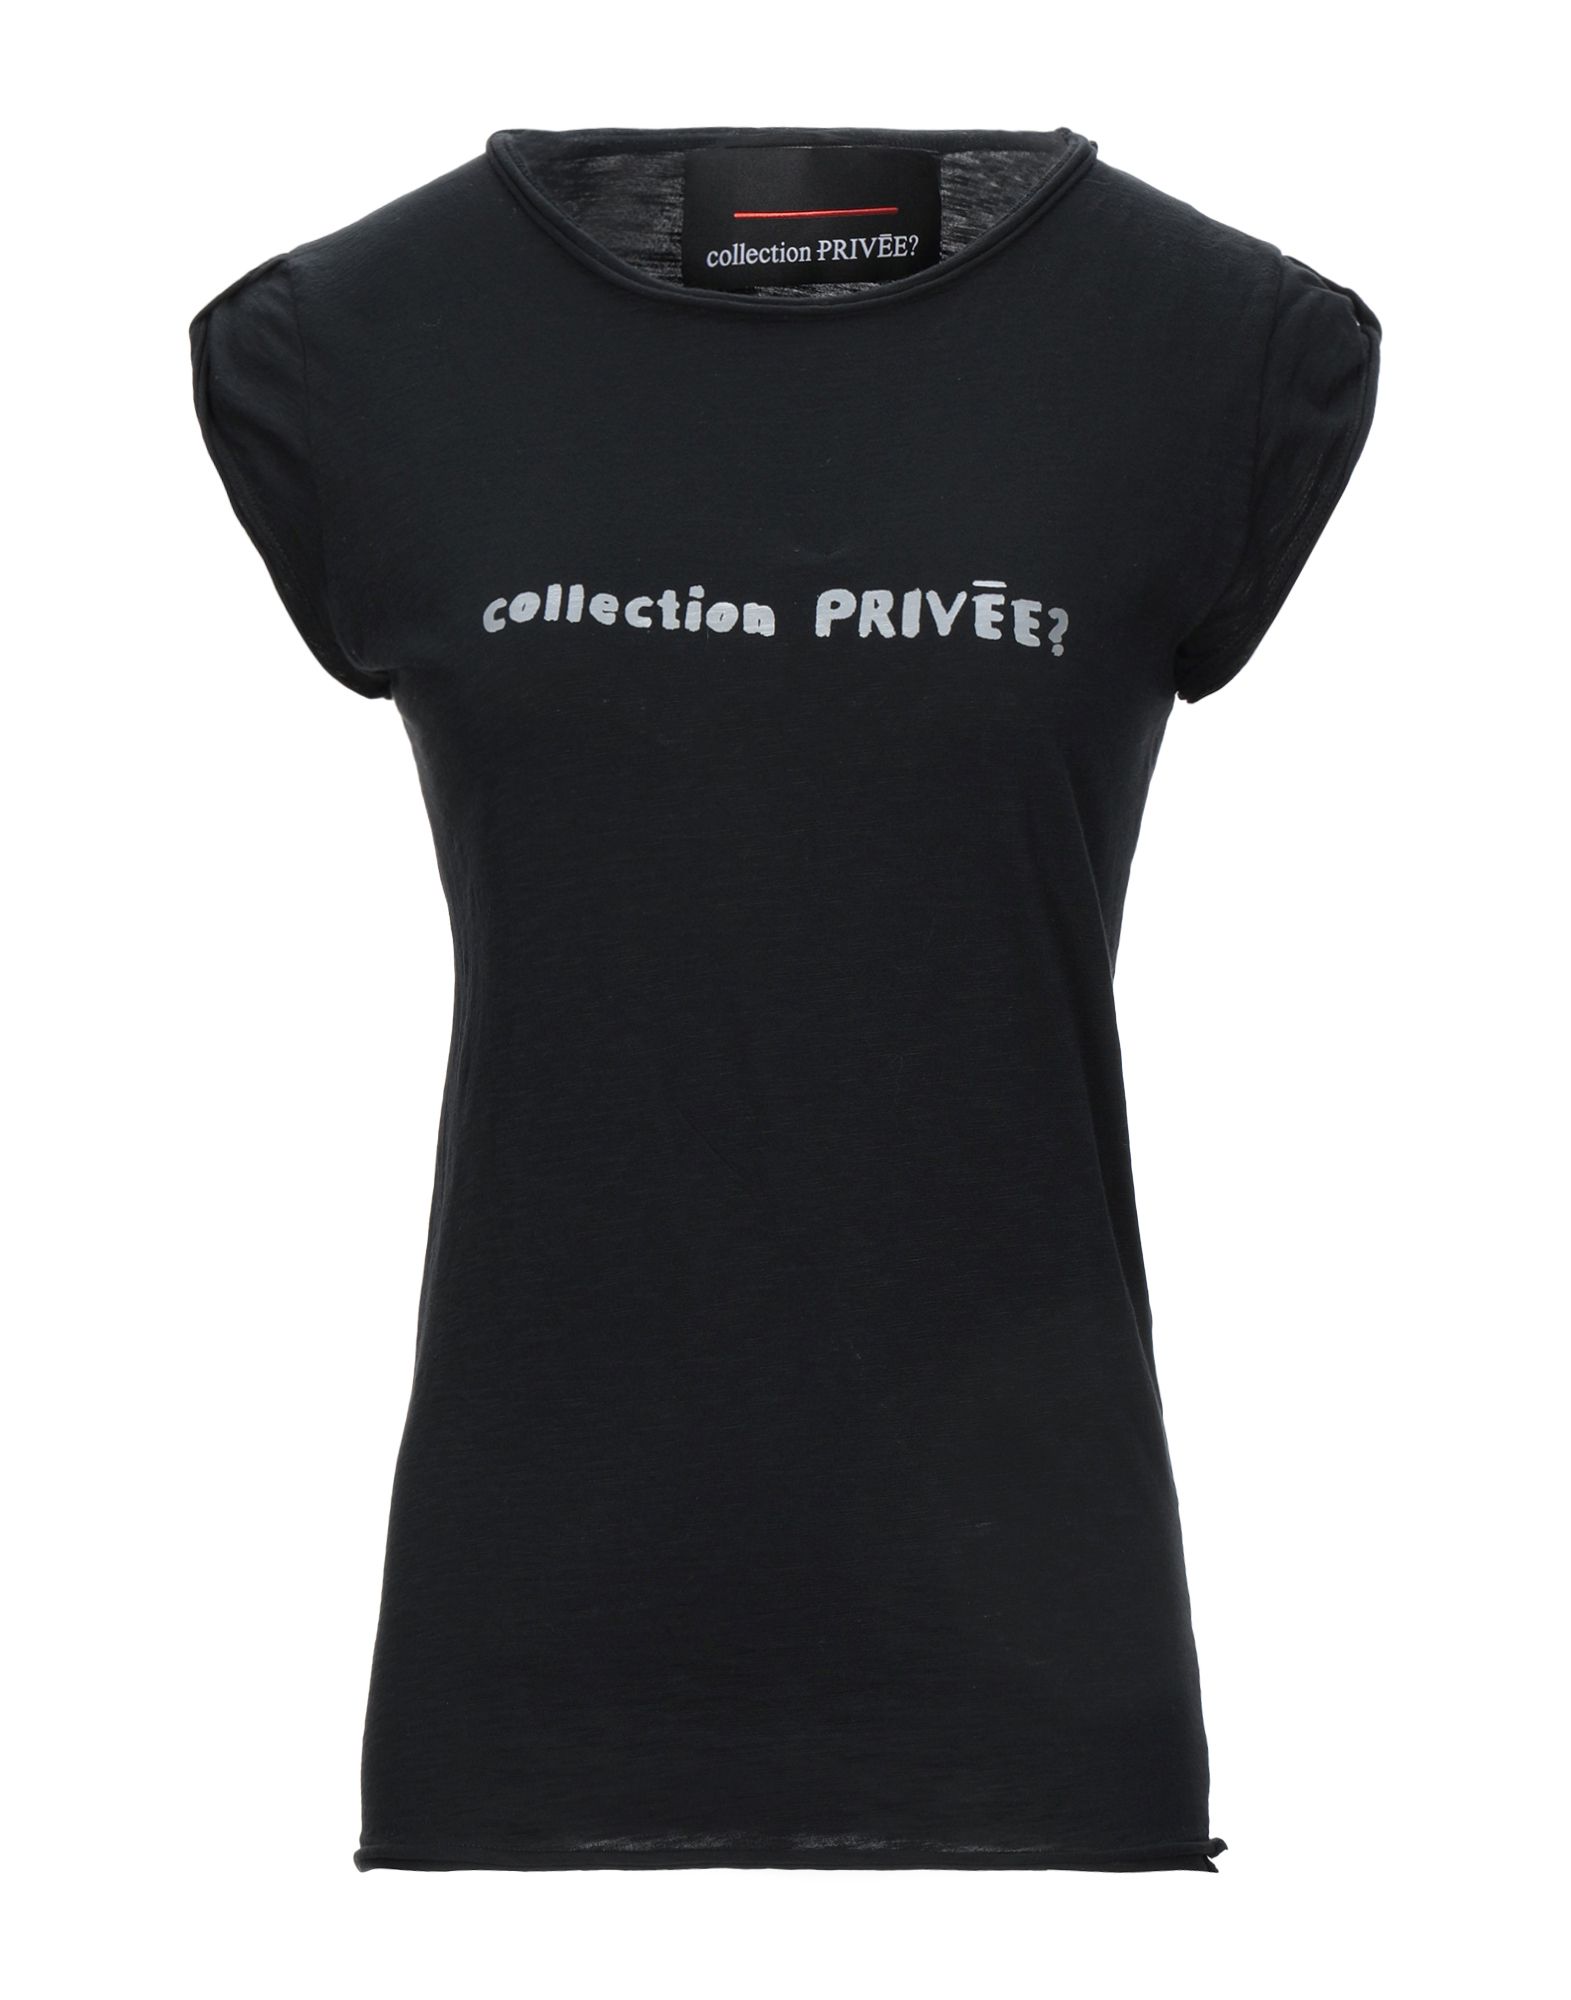 Футболка collection. Футболка collection 98. Nika collection футболки. OSTIN Casual Basic collection футболка женская черная.